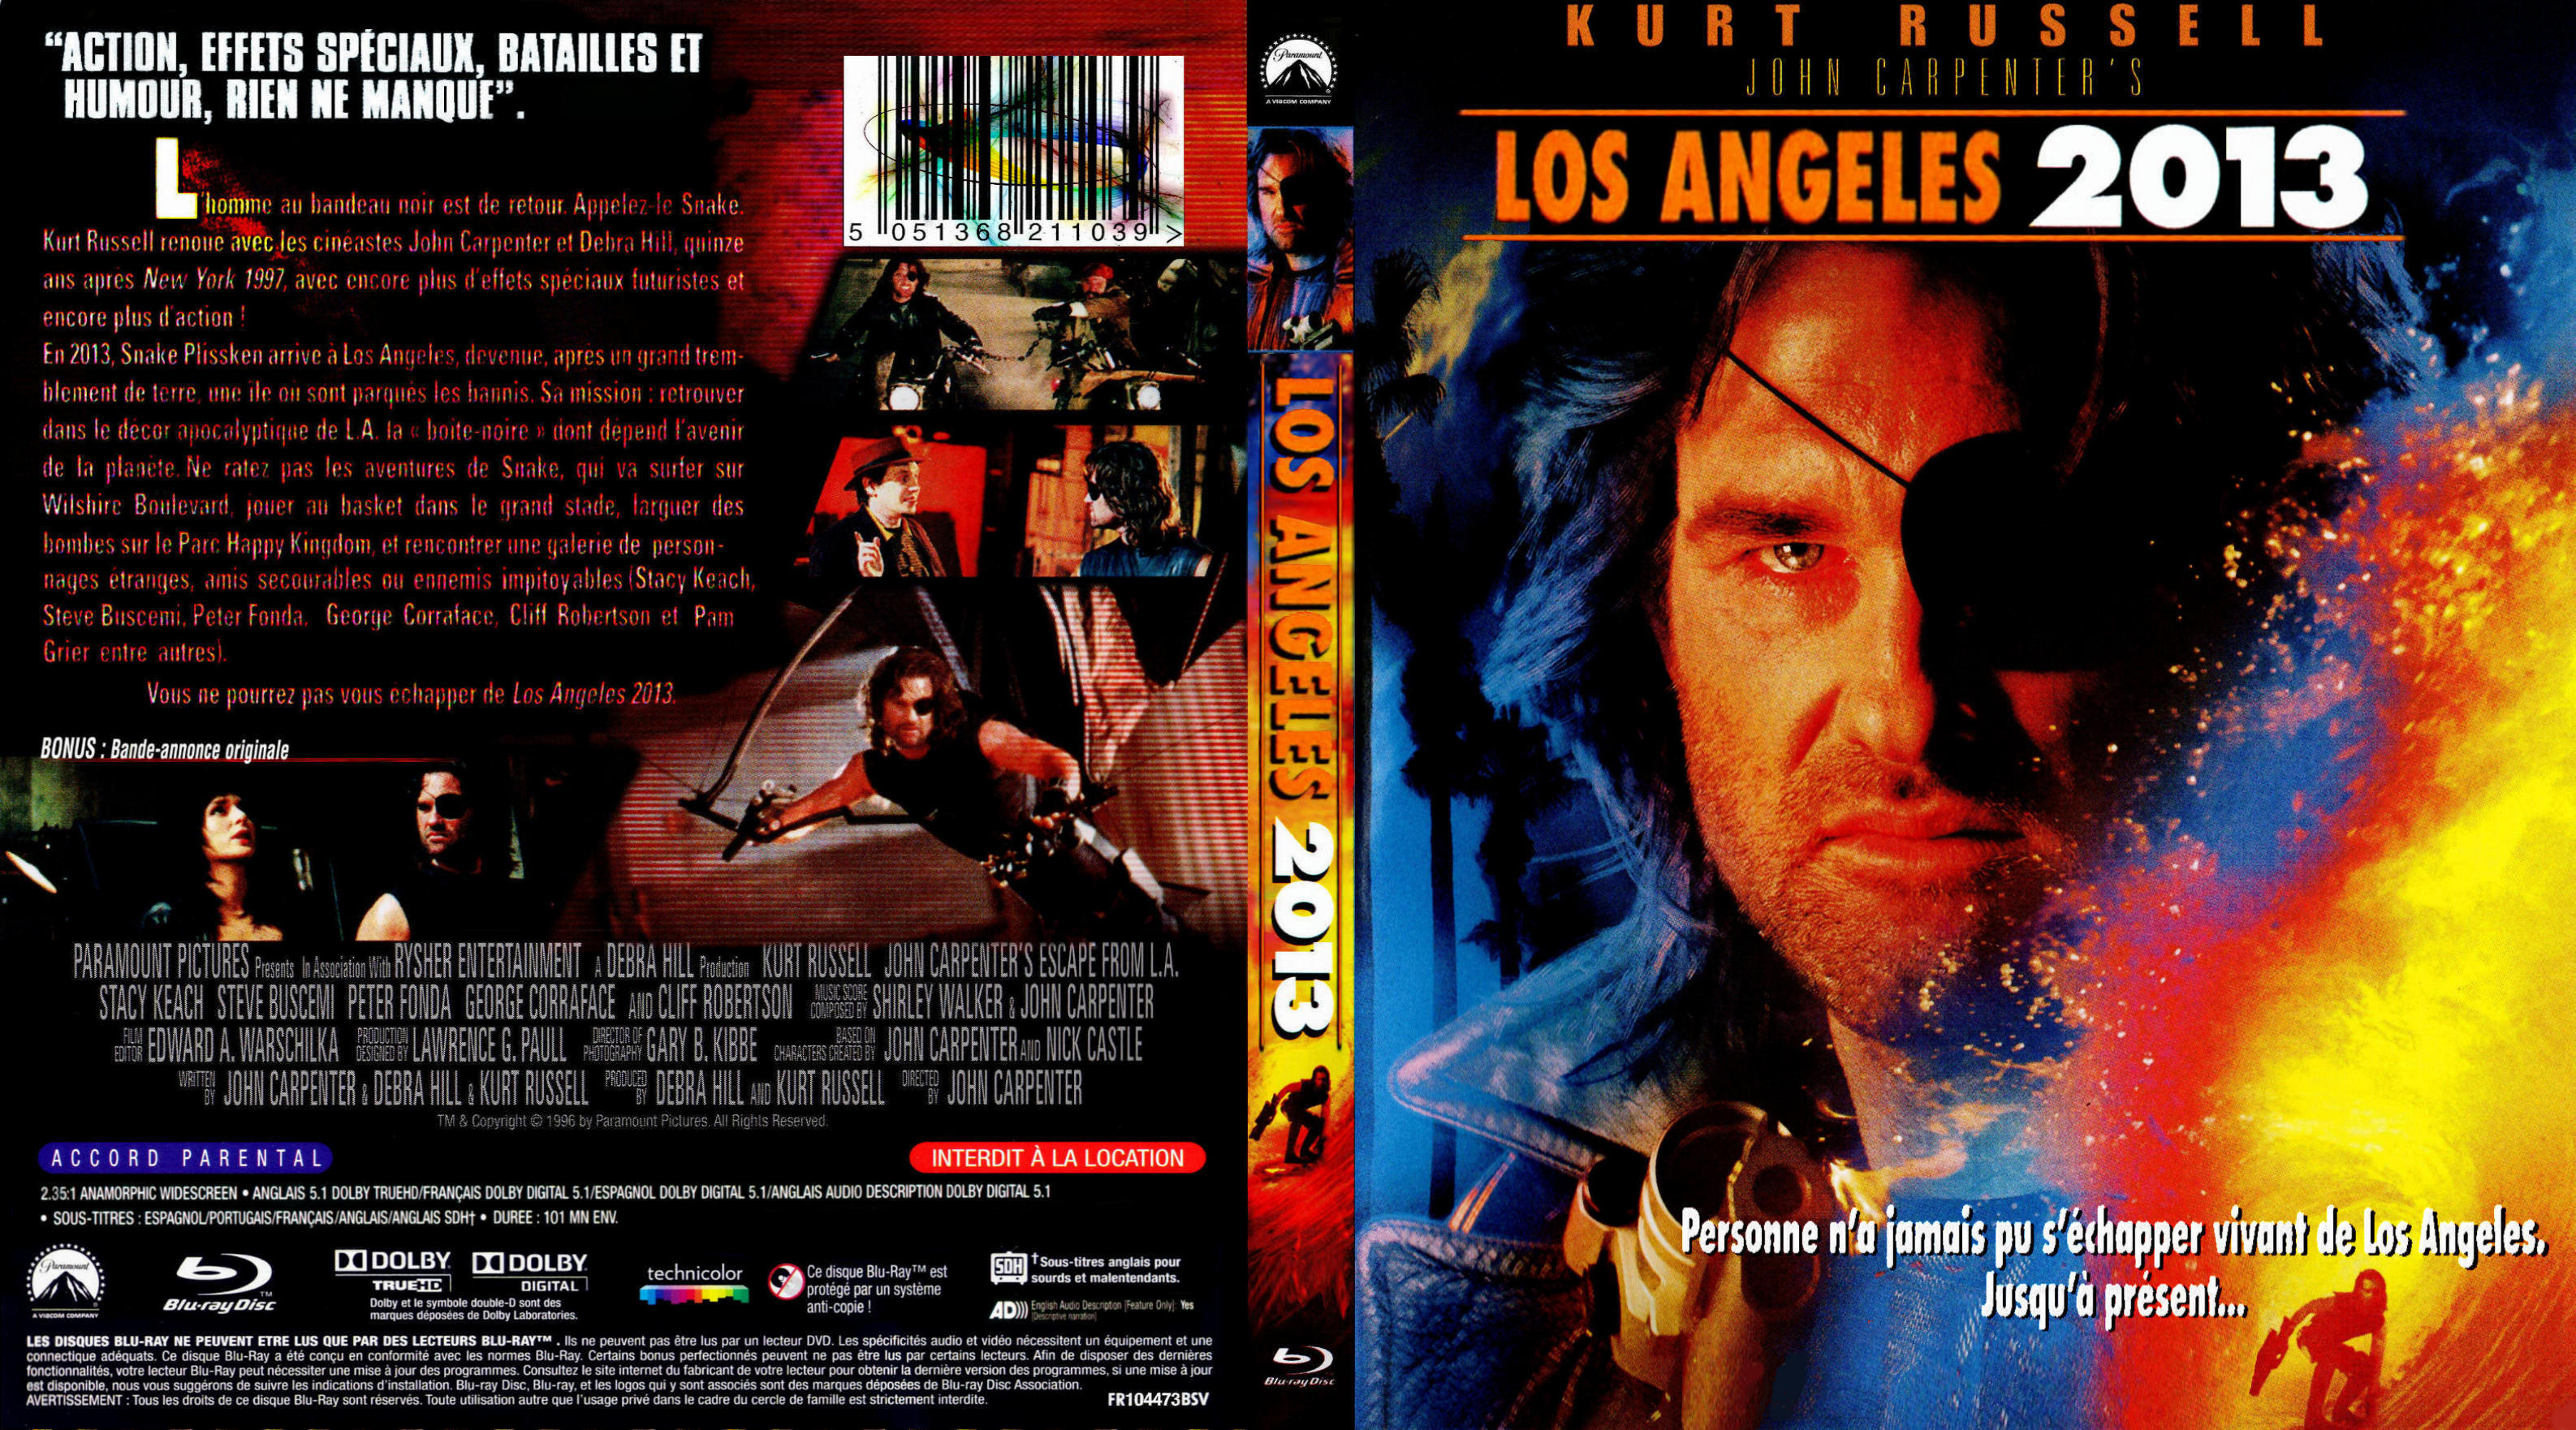 Jaquette DVD Los Angeles 2013 custom (BLU-RAY) v2